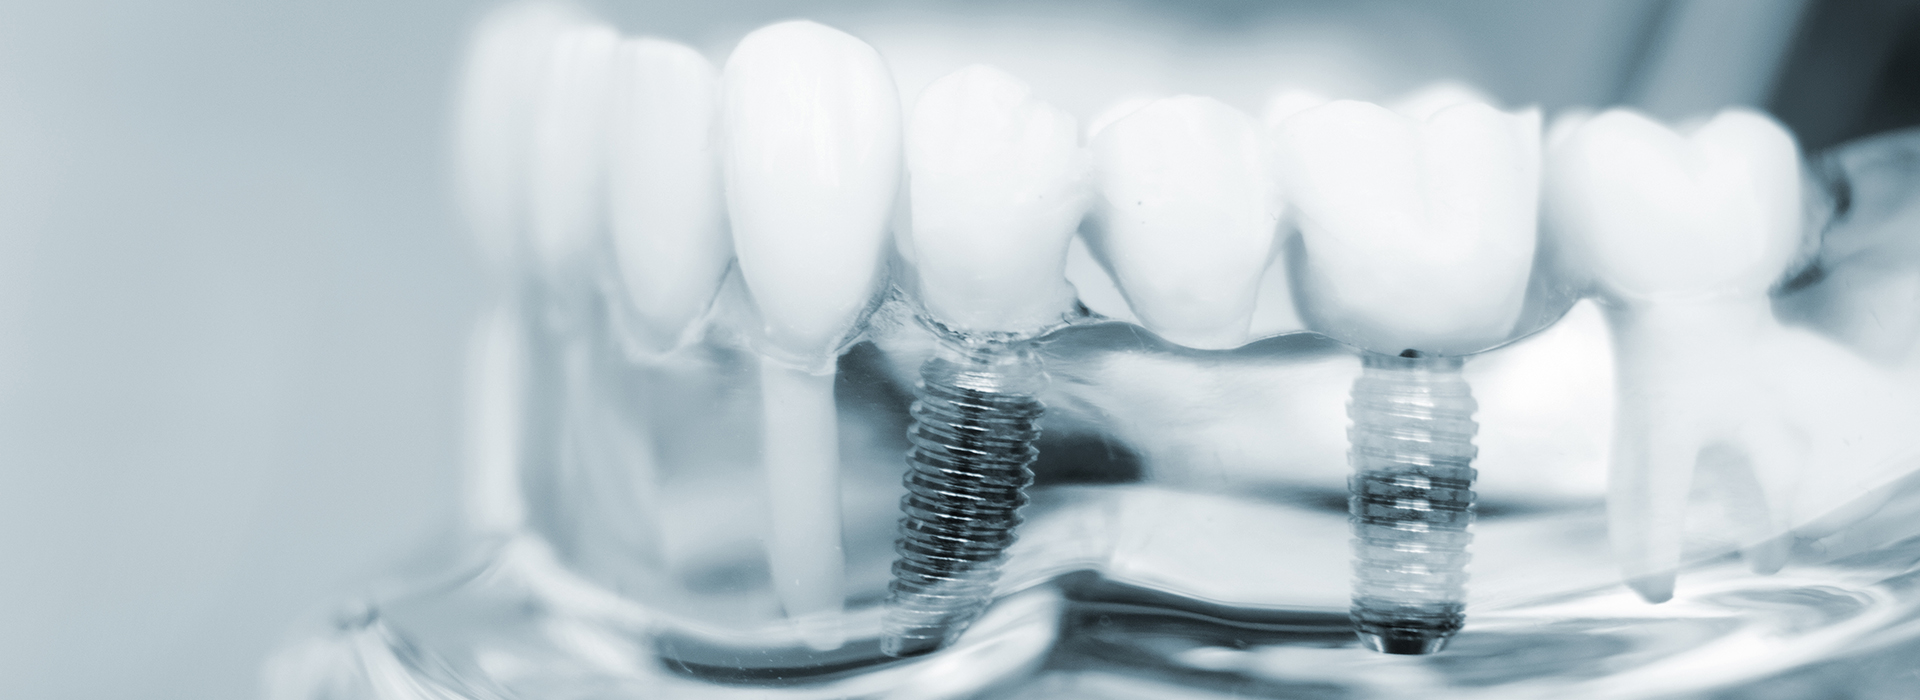 Central Park Dental Aesthetics | Dental Implants, Sleep Apnea and Dental Examinations   Cleanings